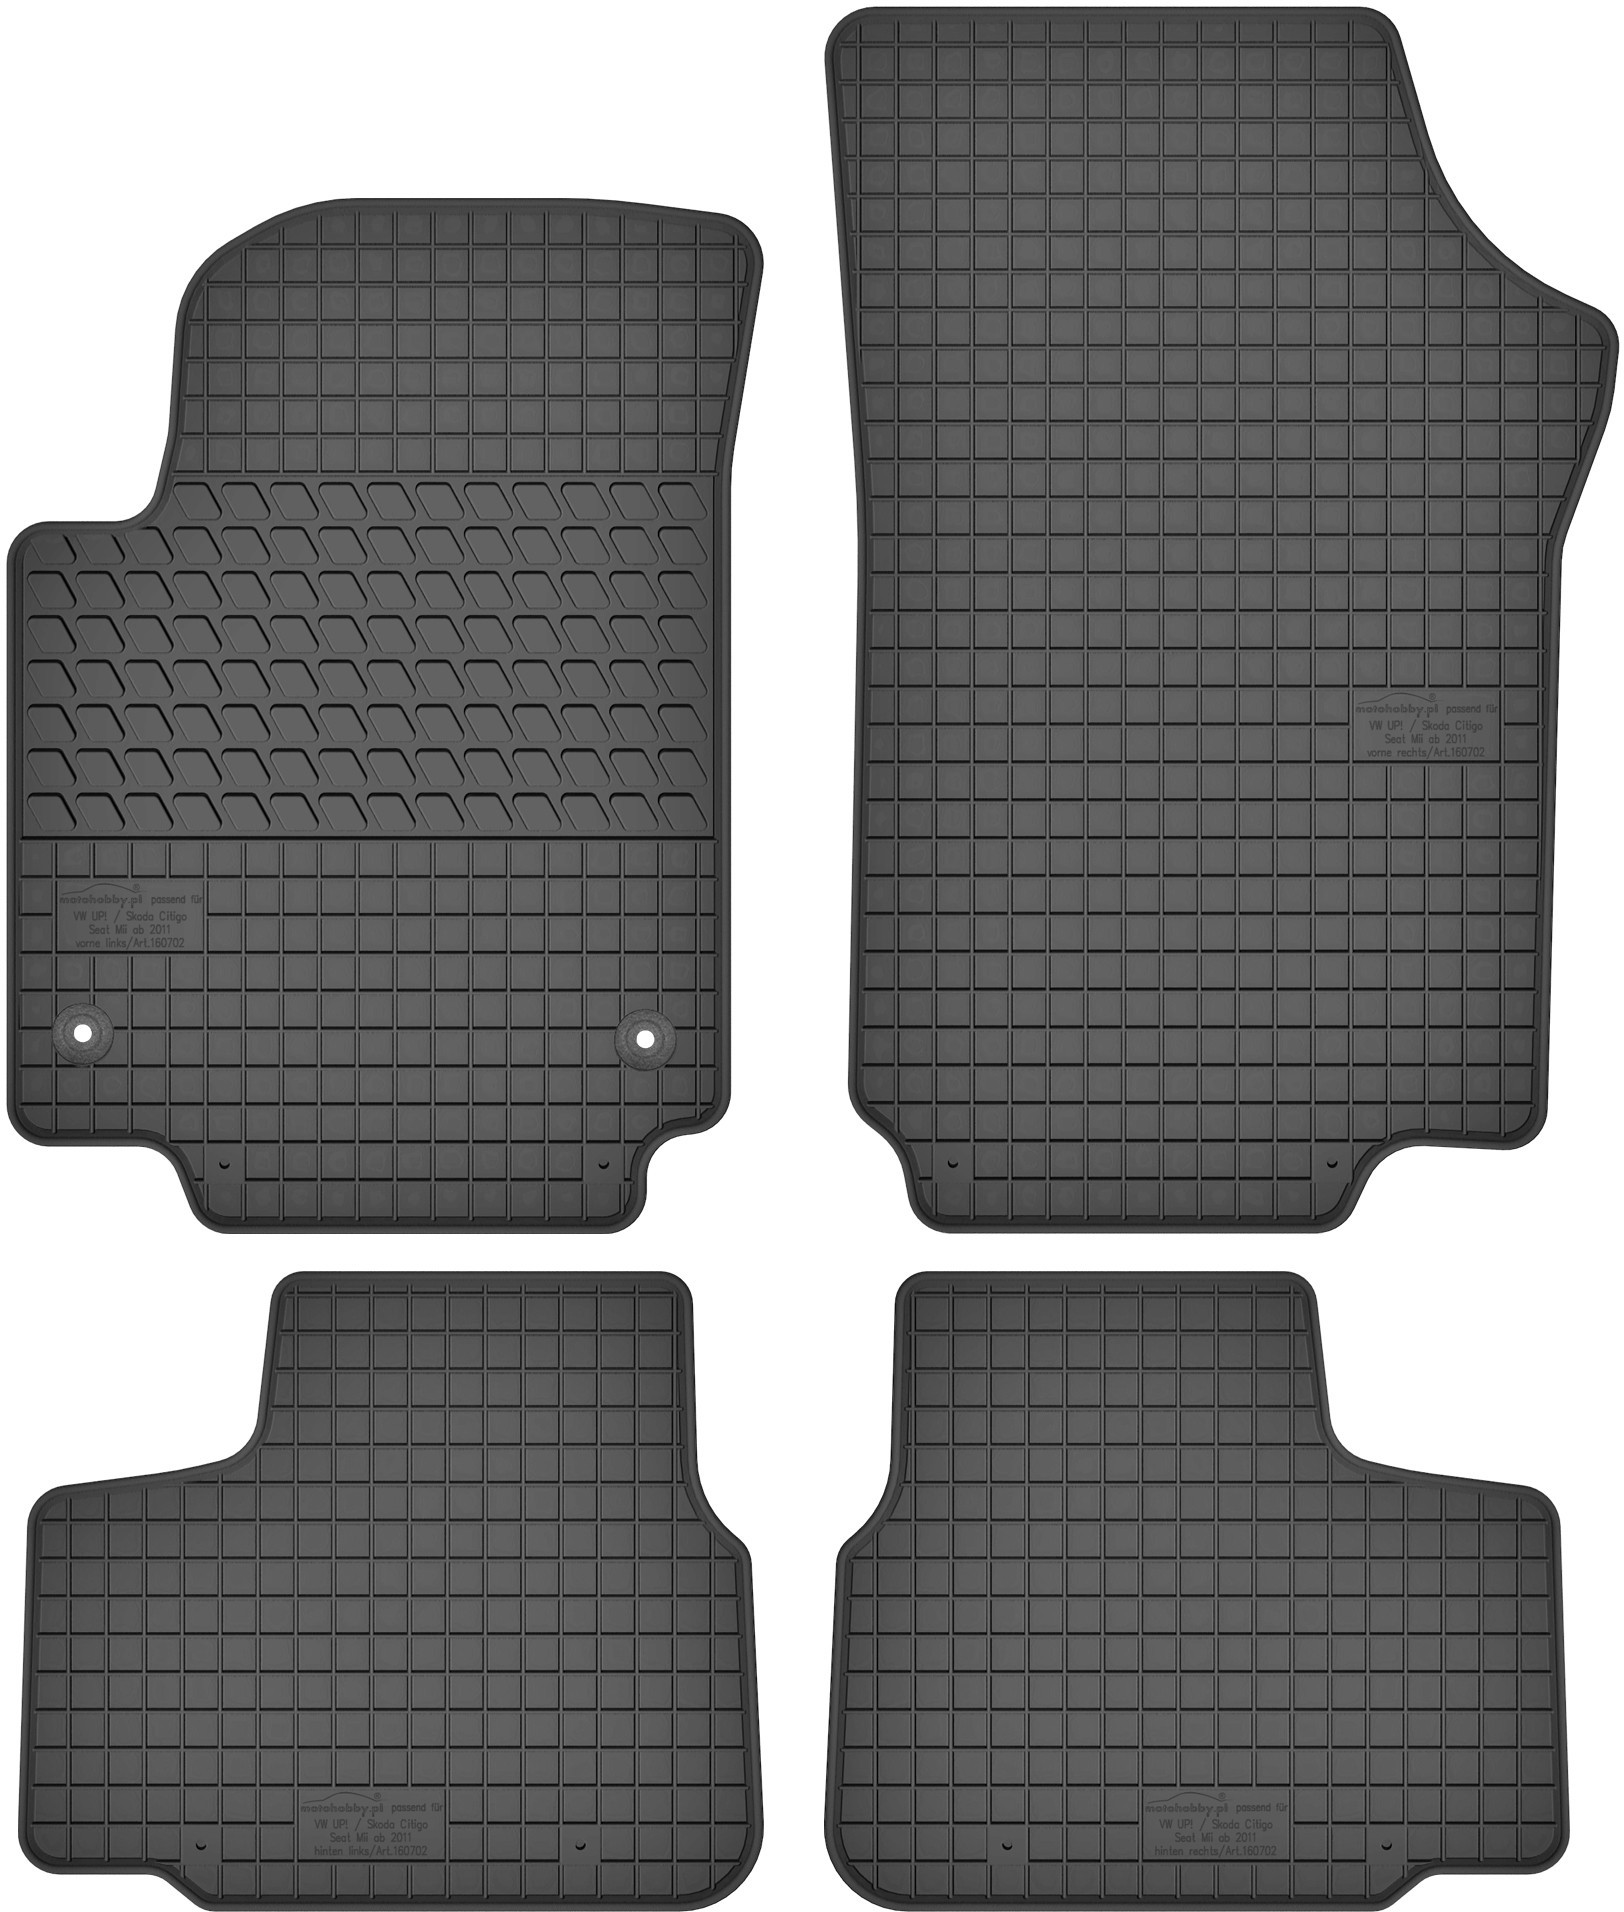 MotoHobby Seat Mii (od 2011) - dywaniki gumowe dedykowane ze stoperami